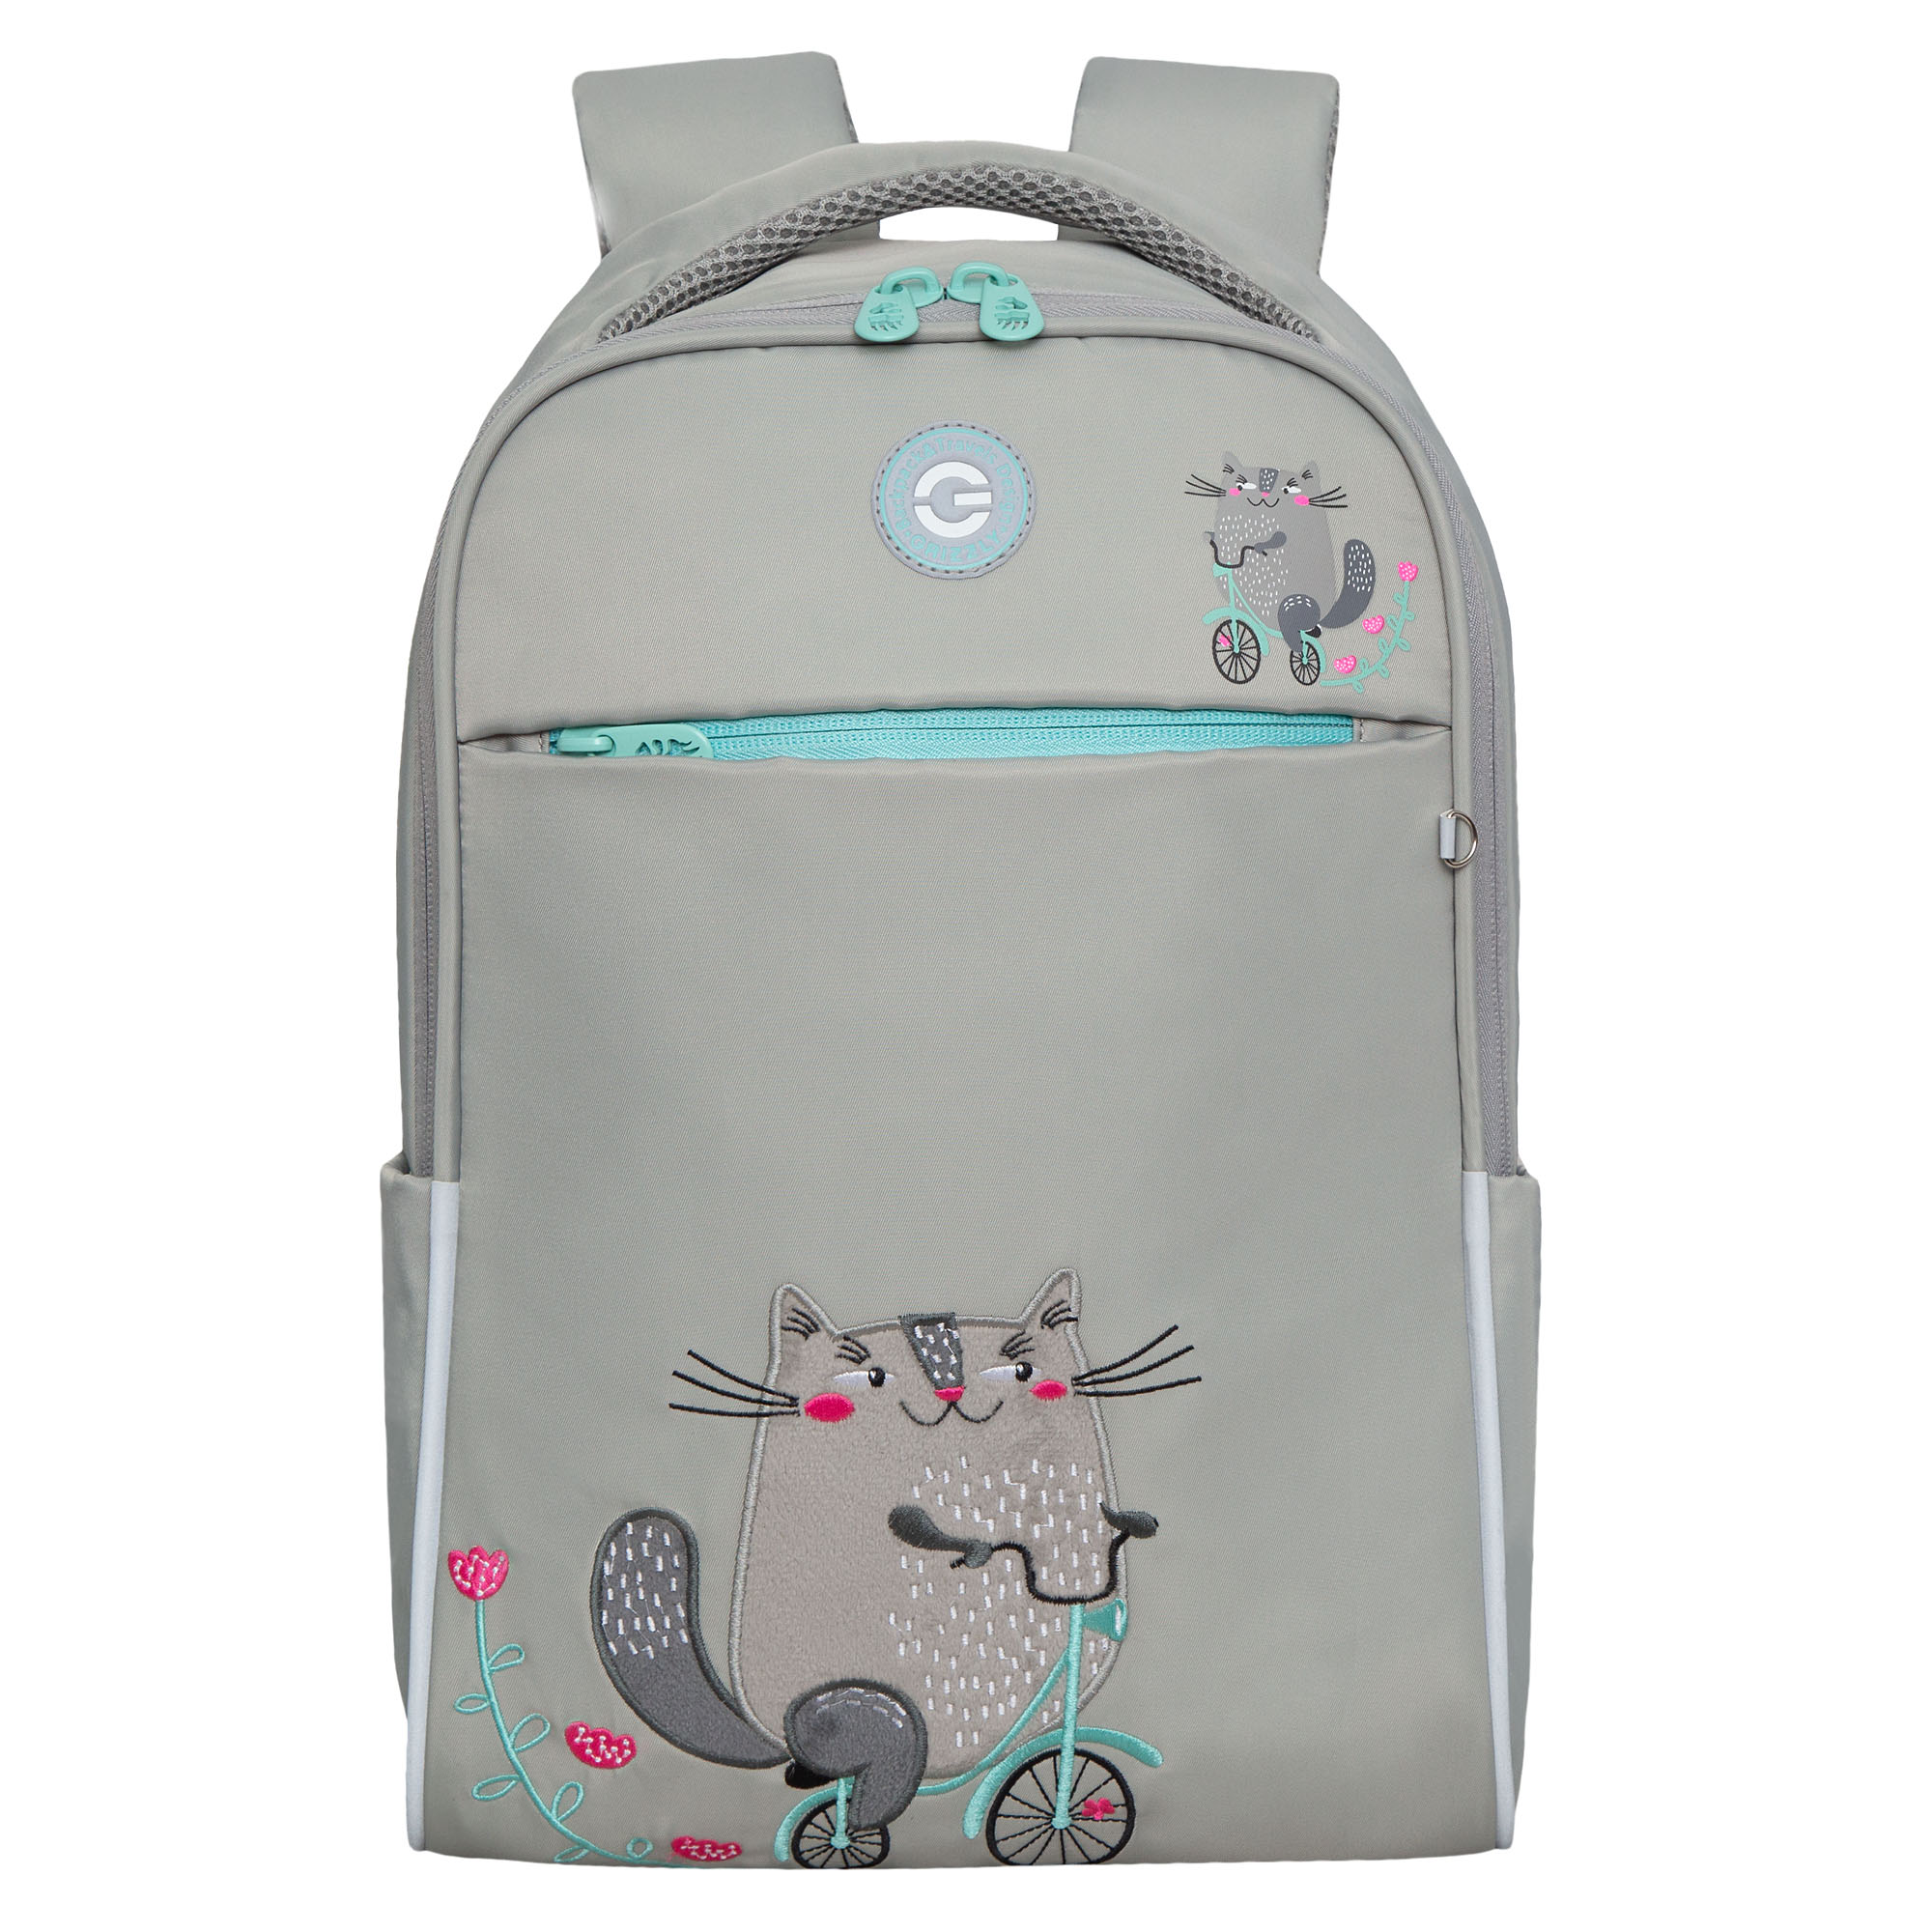 Рюкзак Grizzly школьный для девочки RG-367-3 2 серый рюкзак grizzly школьный для девочки rg 367 3 2 серый